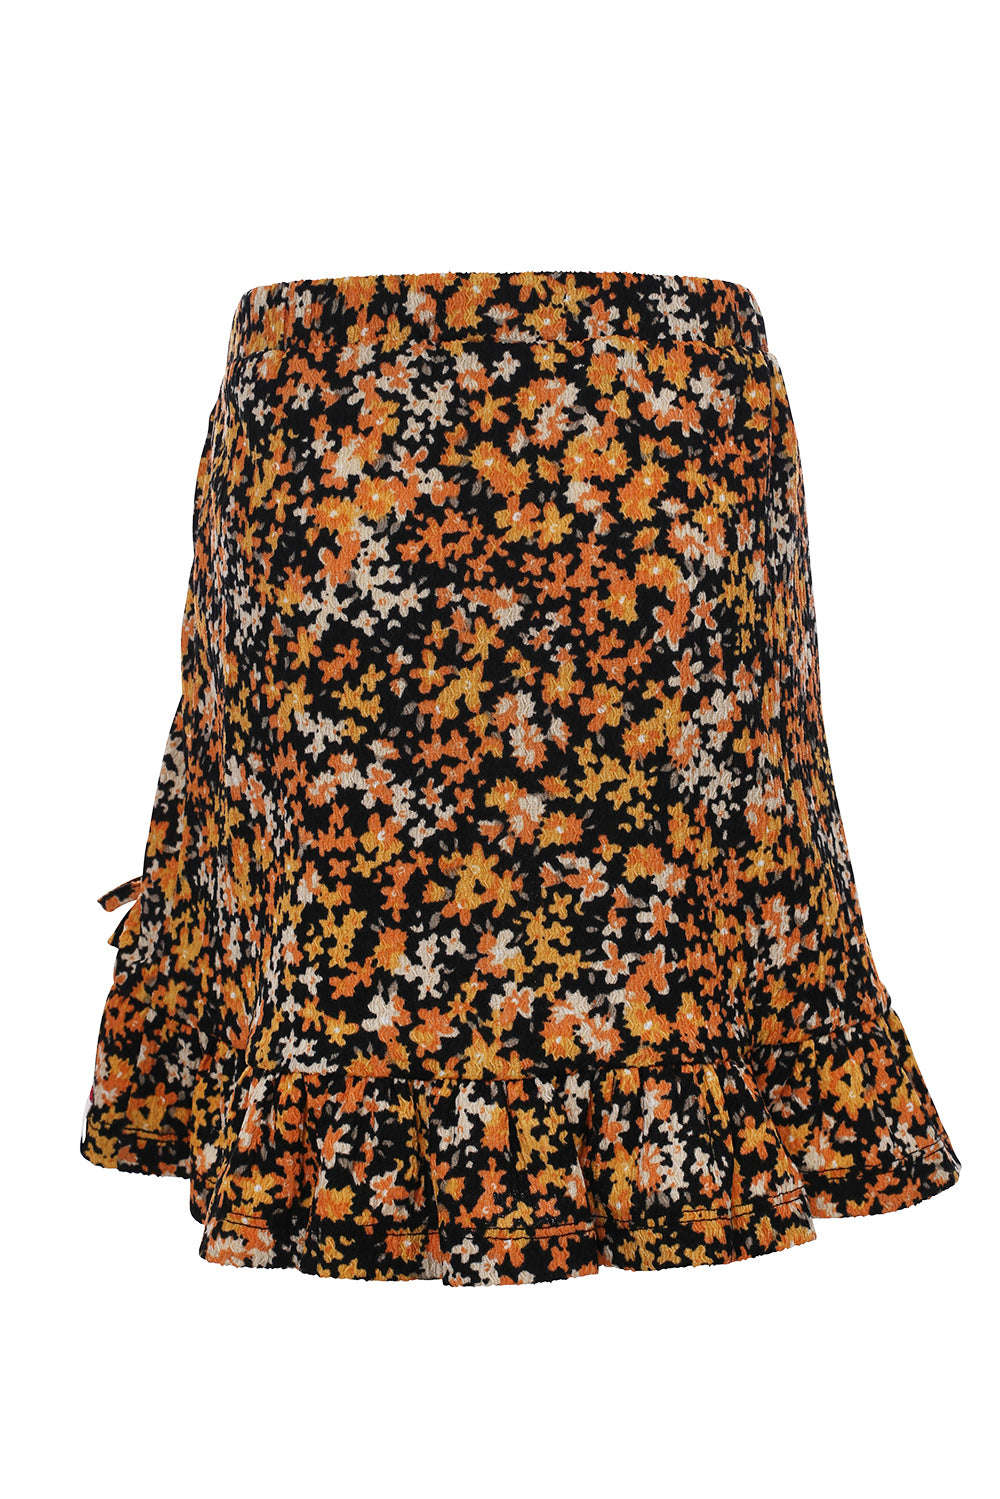 LOOXS 10sixteen Crinkle Flower Skirt